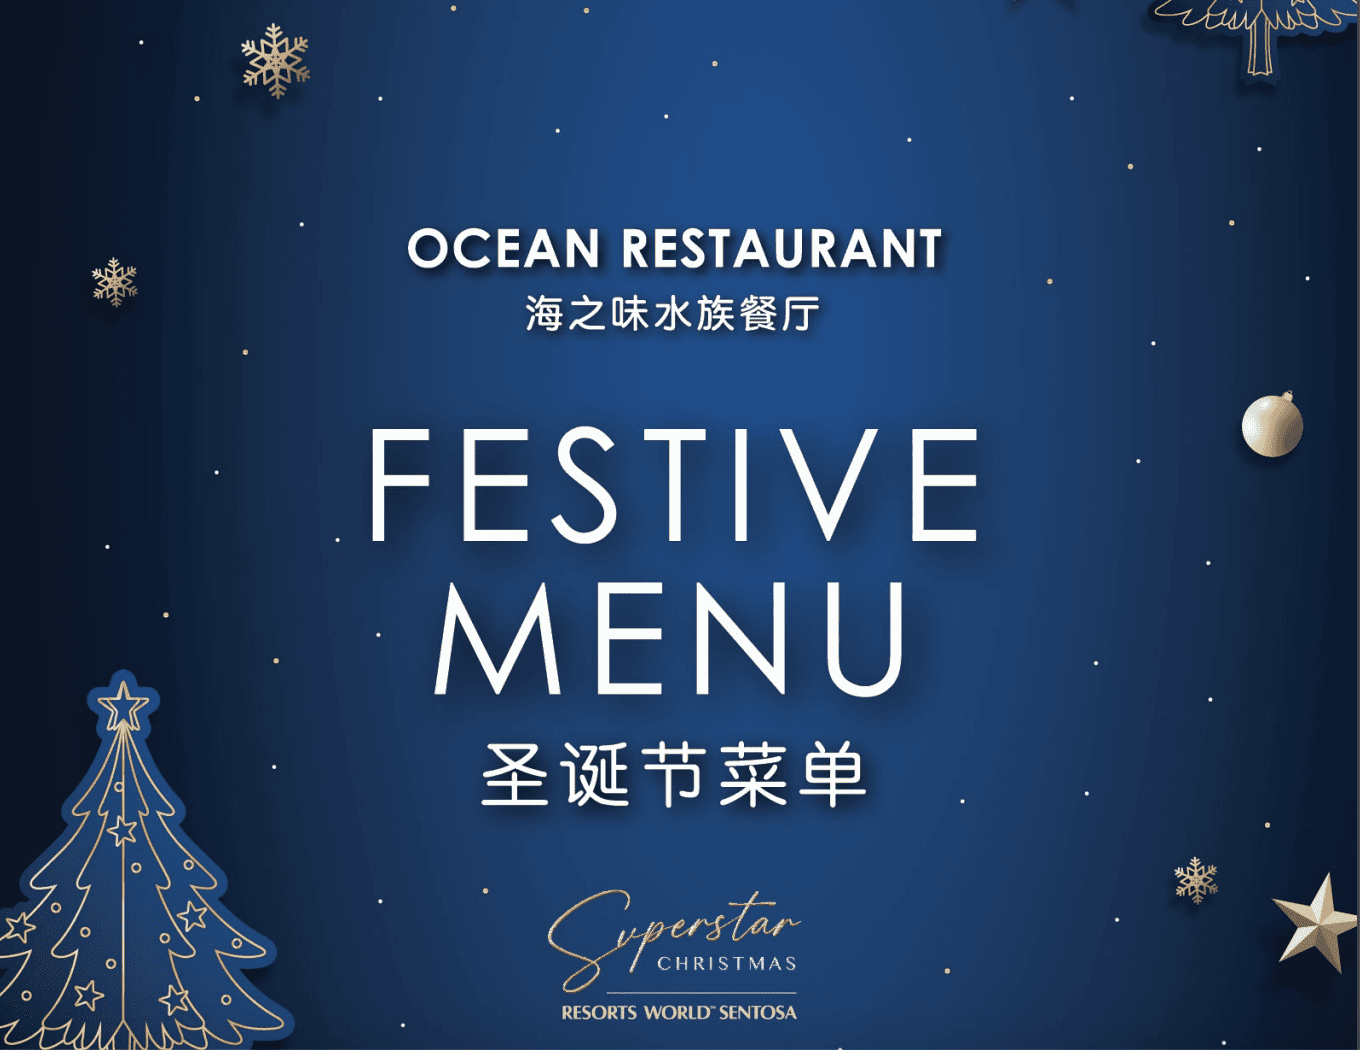 Ocean restaurant festive menu